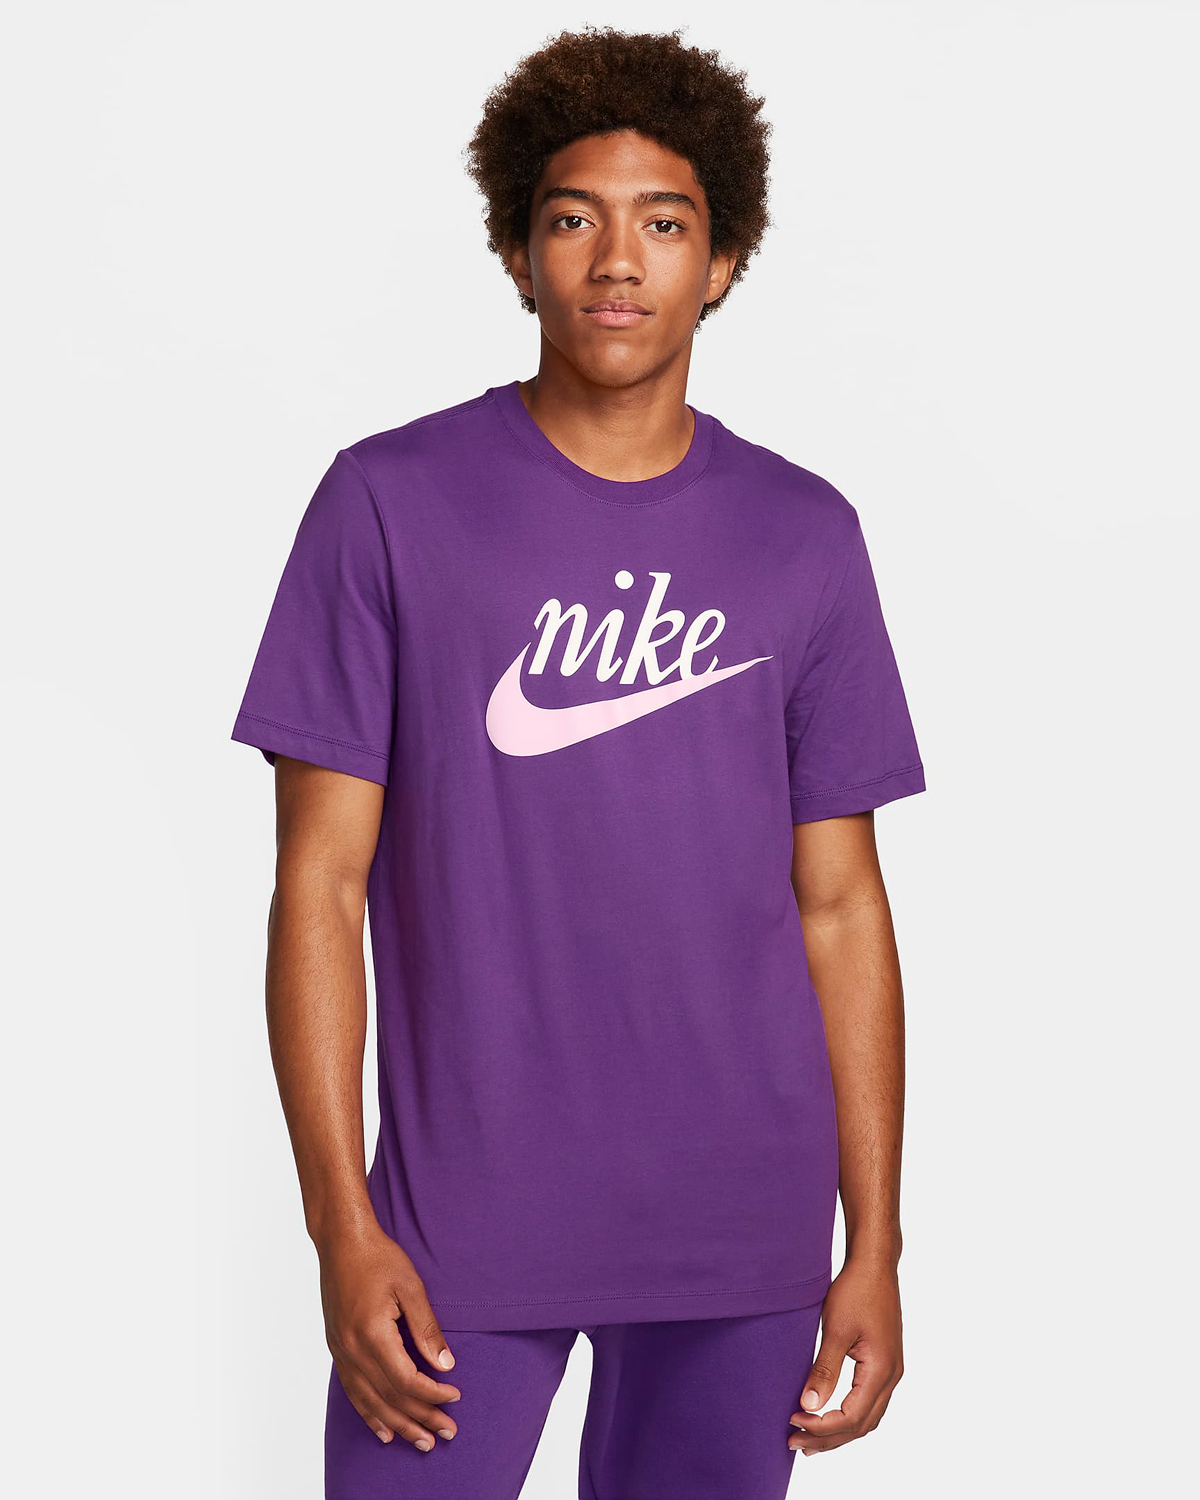 Nike-Sportswear-T-Shirt-Purple-Cosmos